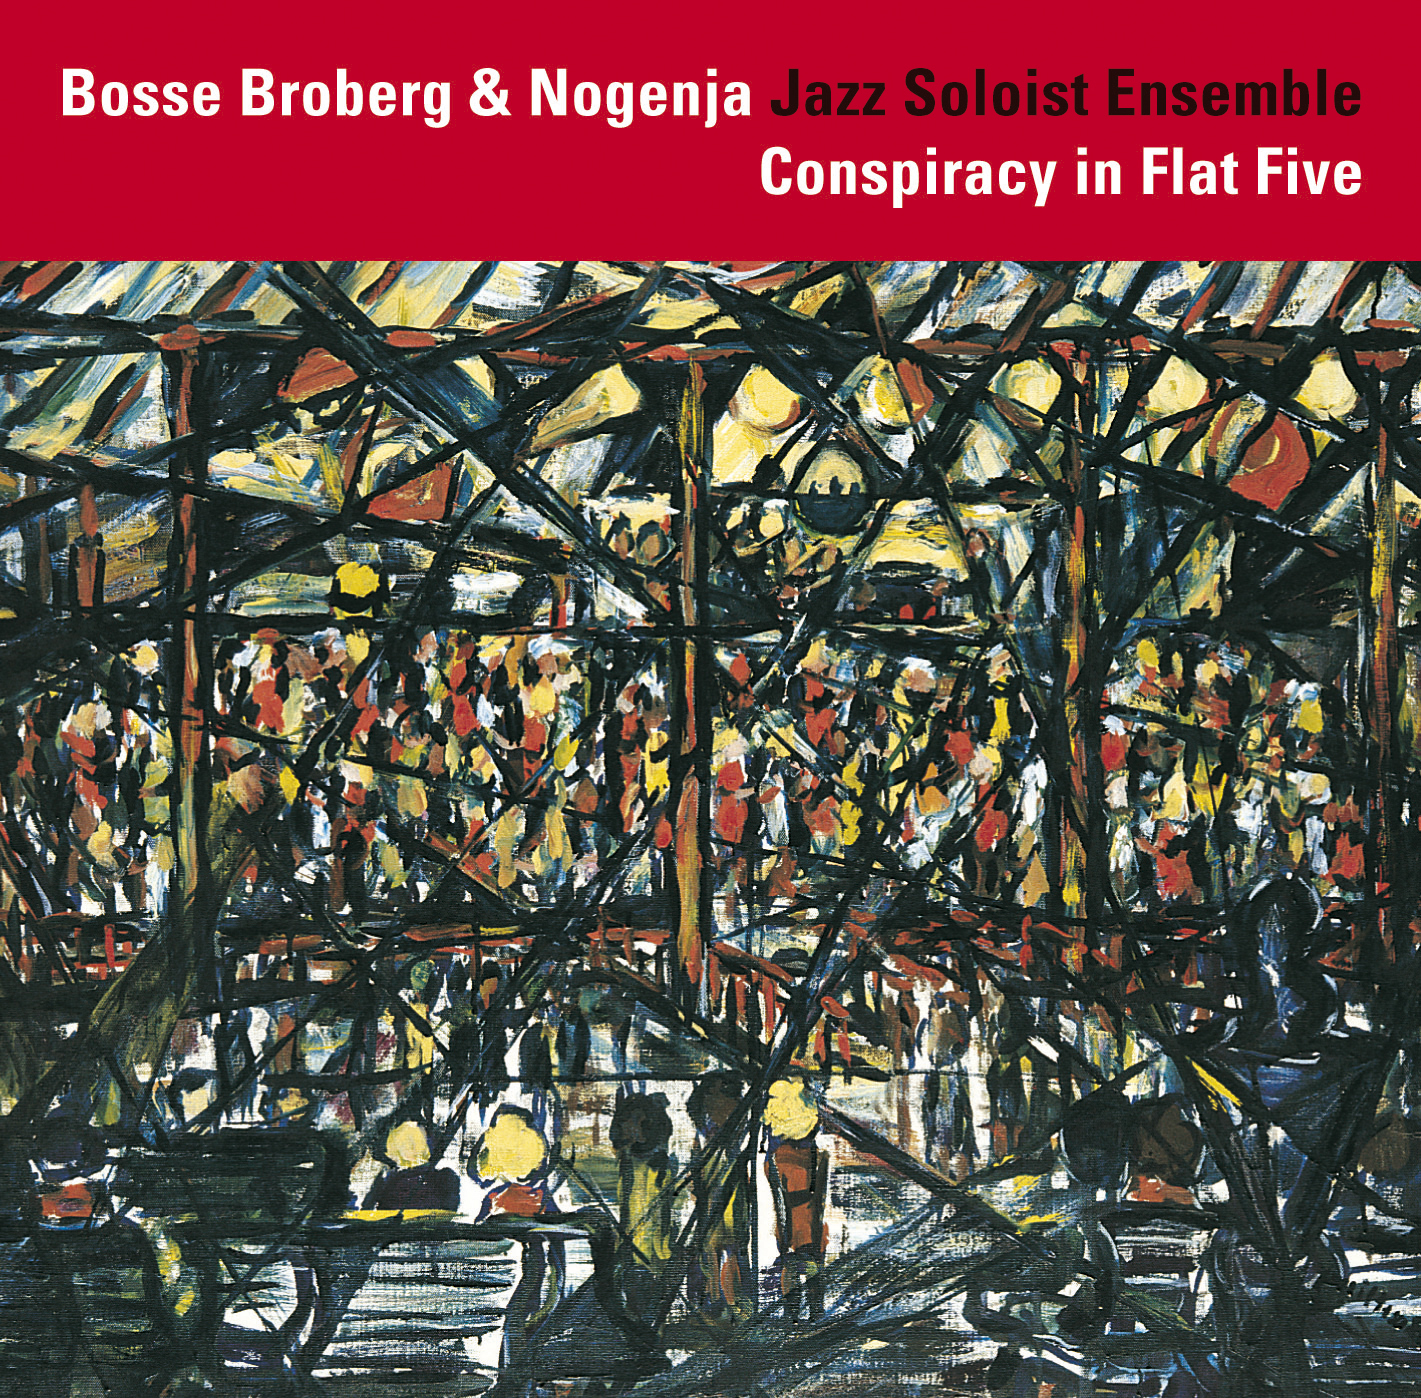 Bosse Broberg & Nogenja Conspiracy in Flat Five